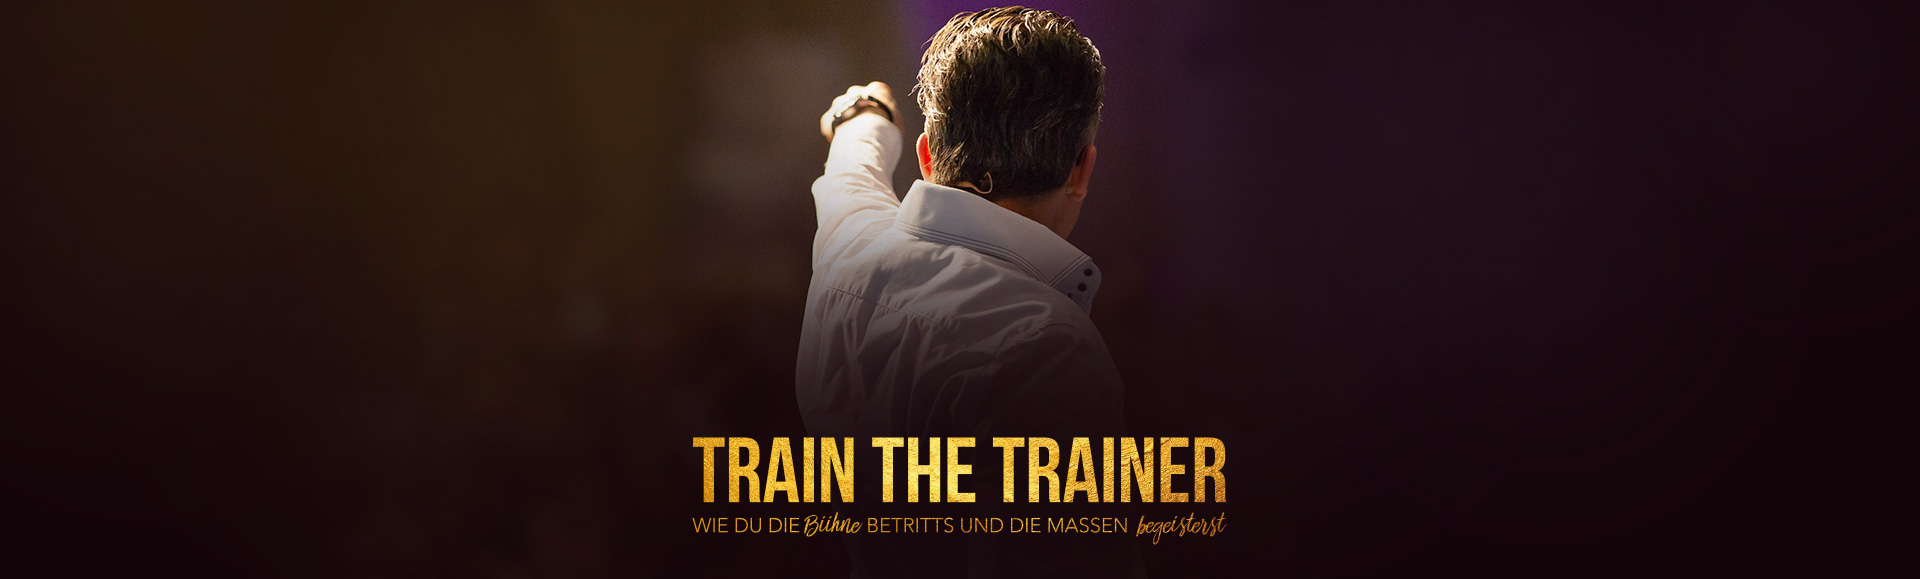 Train-the-Trainer_Live-Workshop_Damian-Richter